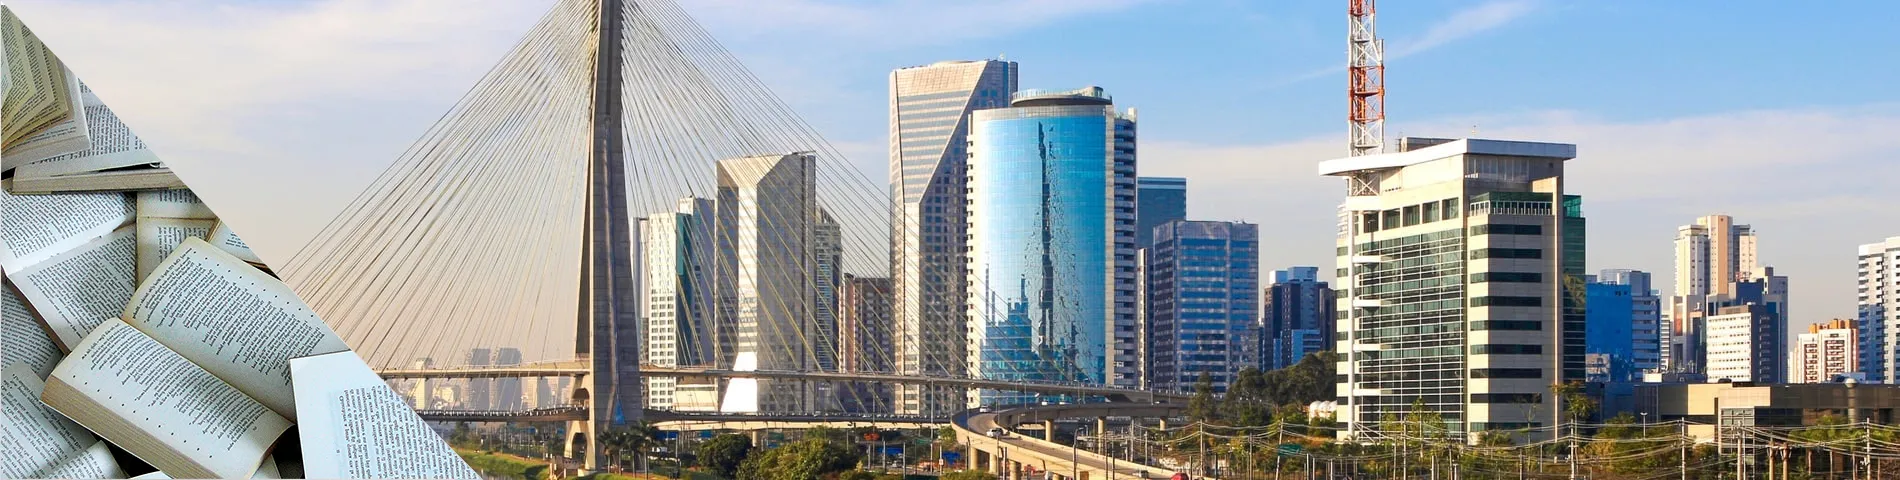 Sao Paulo - Super intenzívny (35+h)